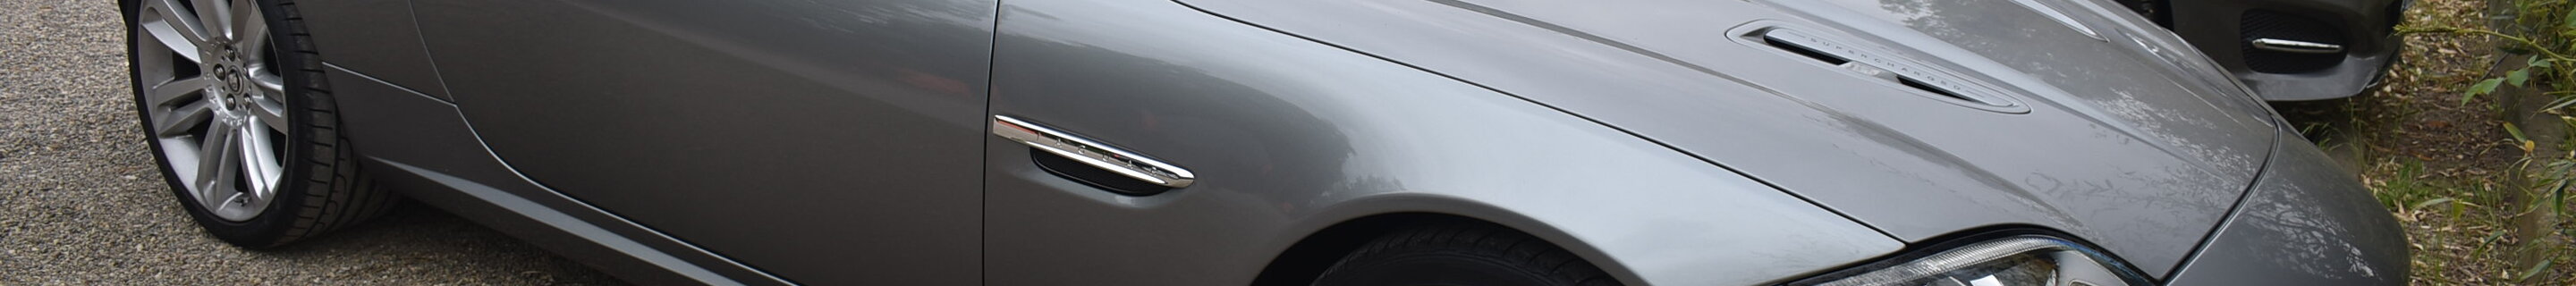 Jaguar XKR Convertible 2012